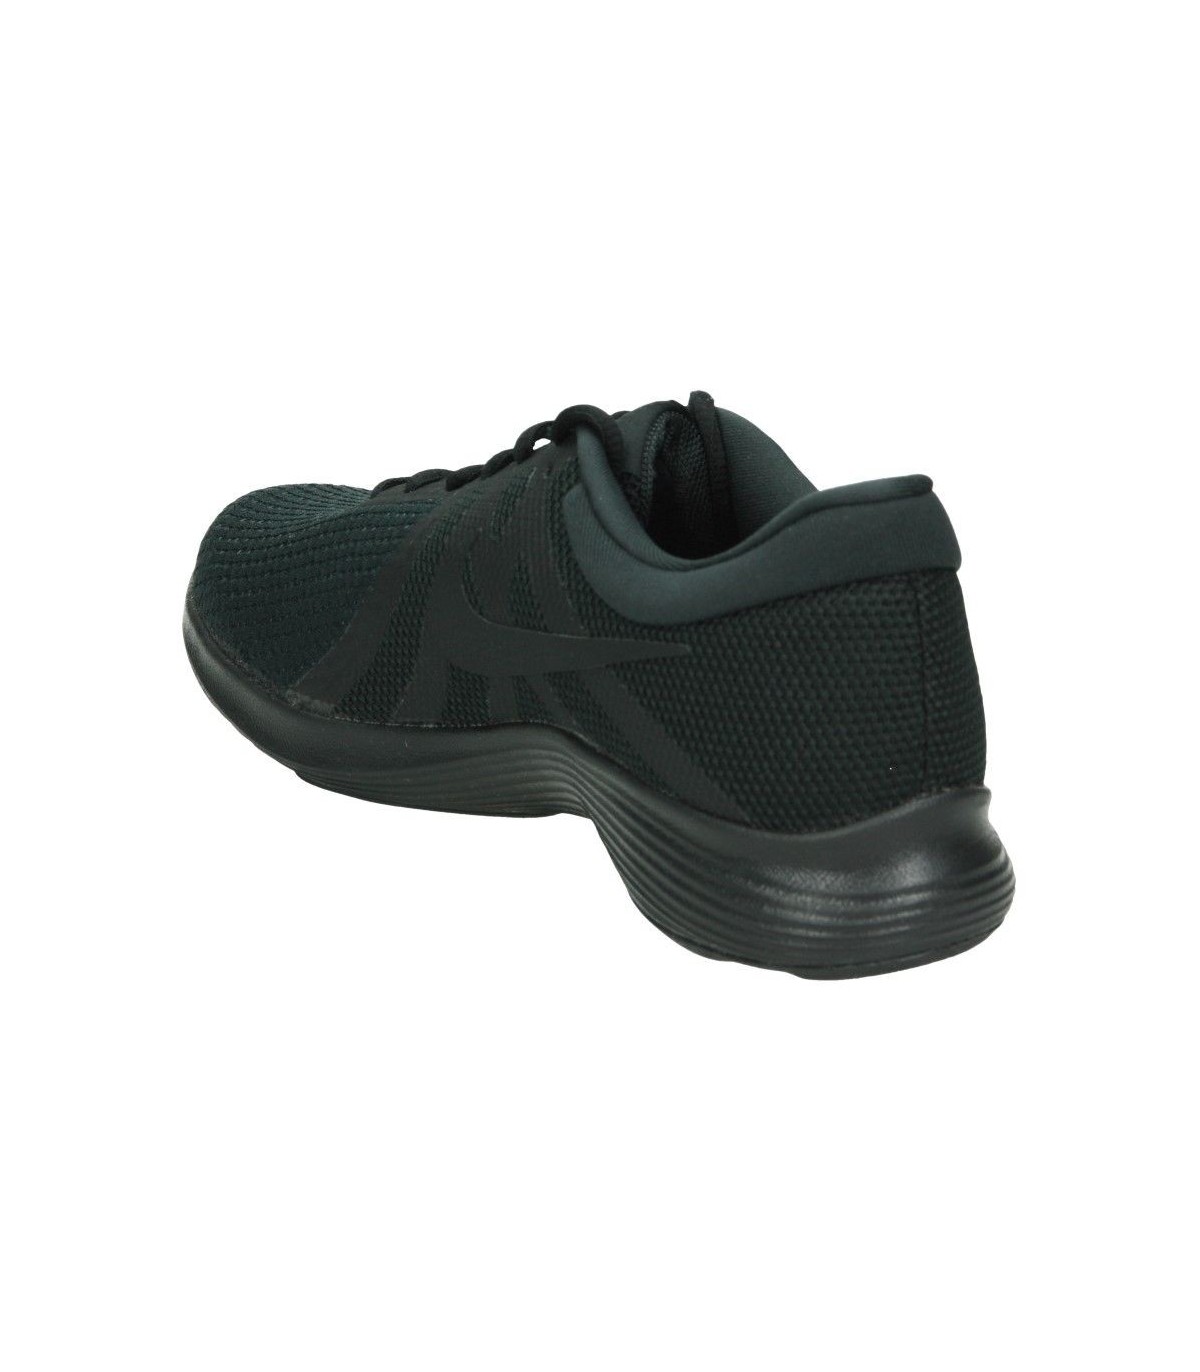 Instalación Aprendiz Catarata Nike negro aj3490-002 deportivas para caballero